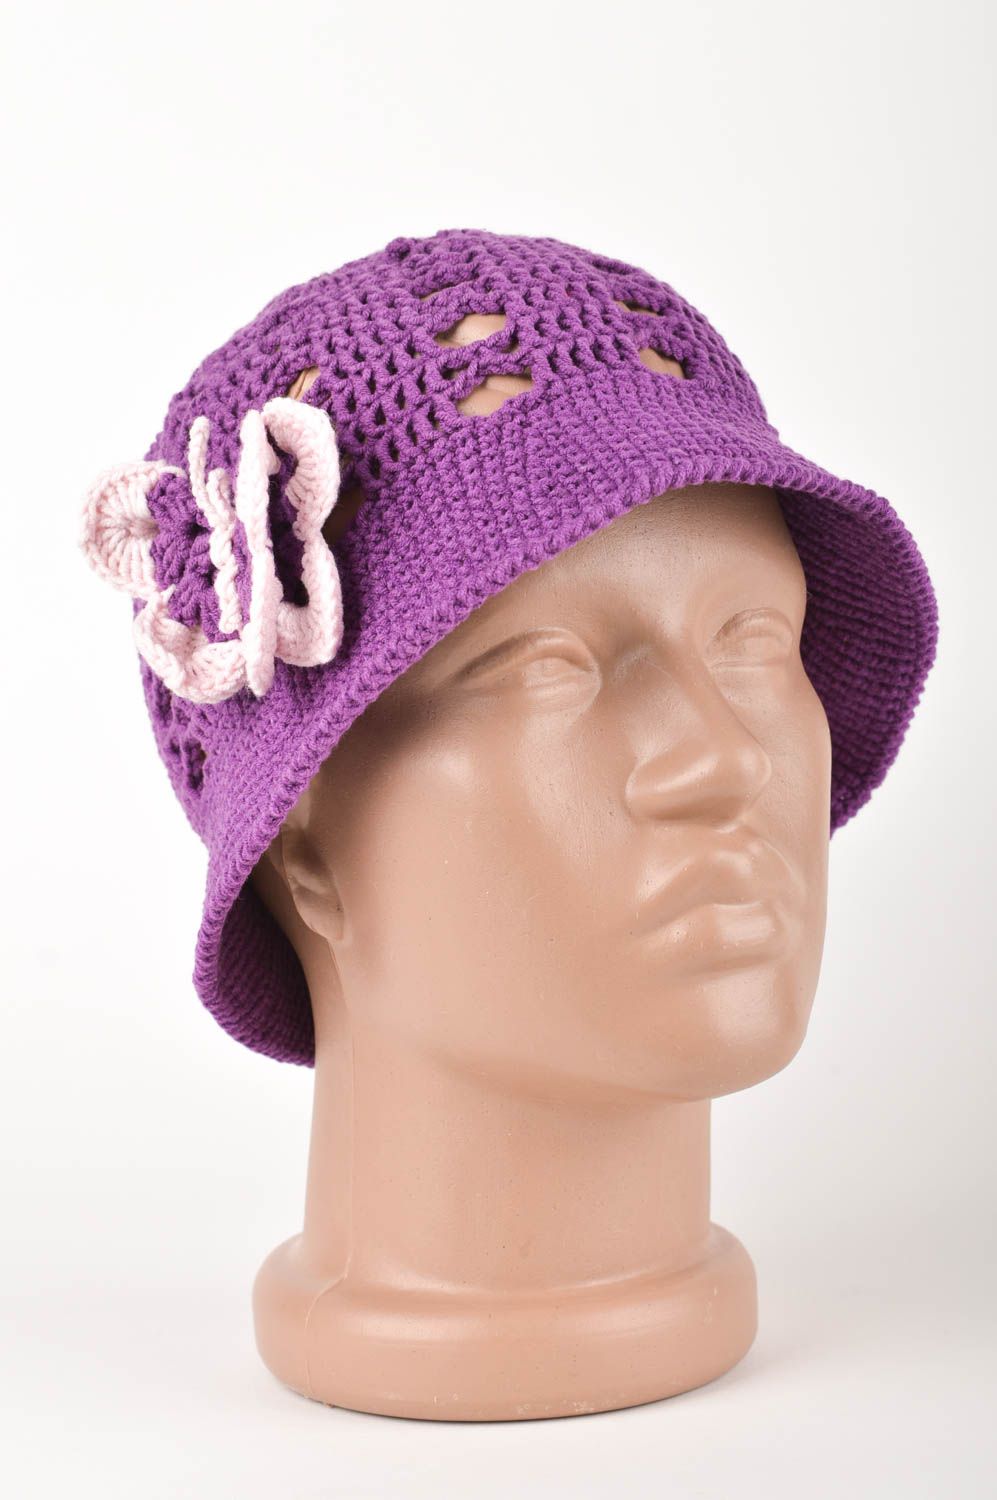 Вязаная панамка для детей хенд мейд весенняя шапка панамка крючком фиолетовая фото 1